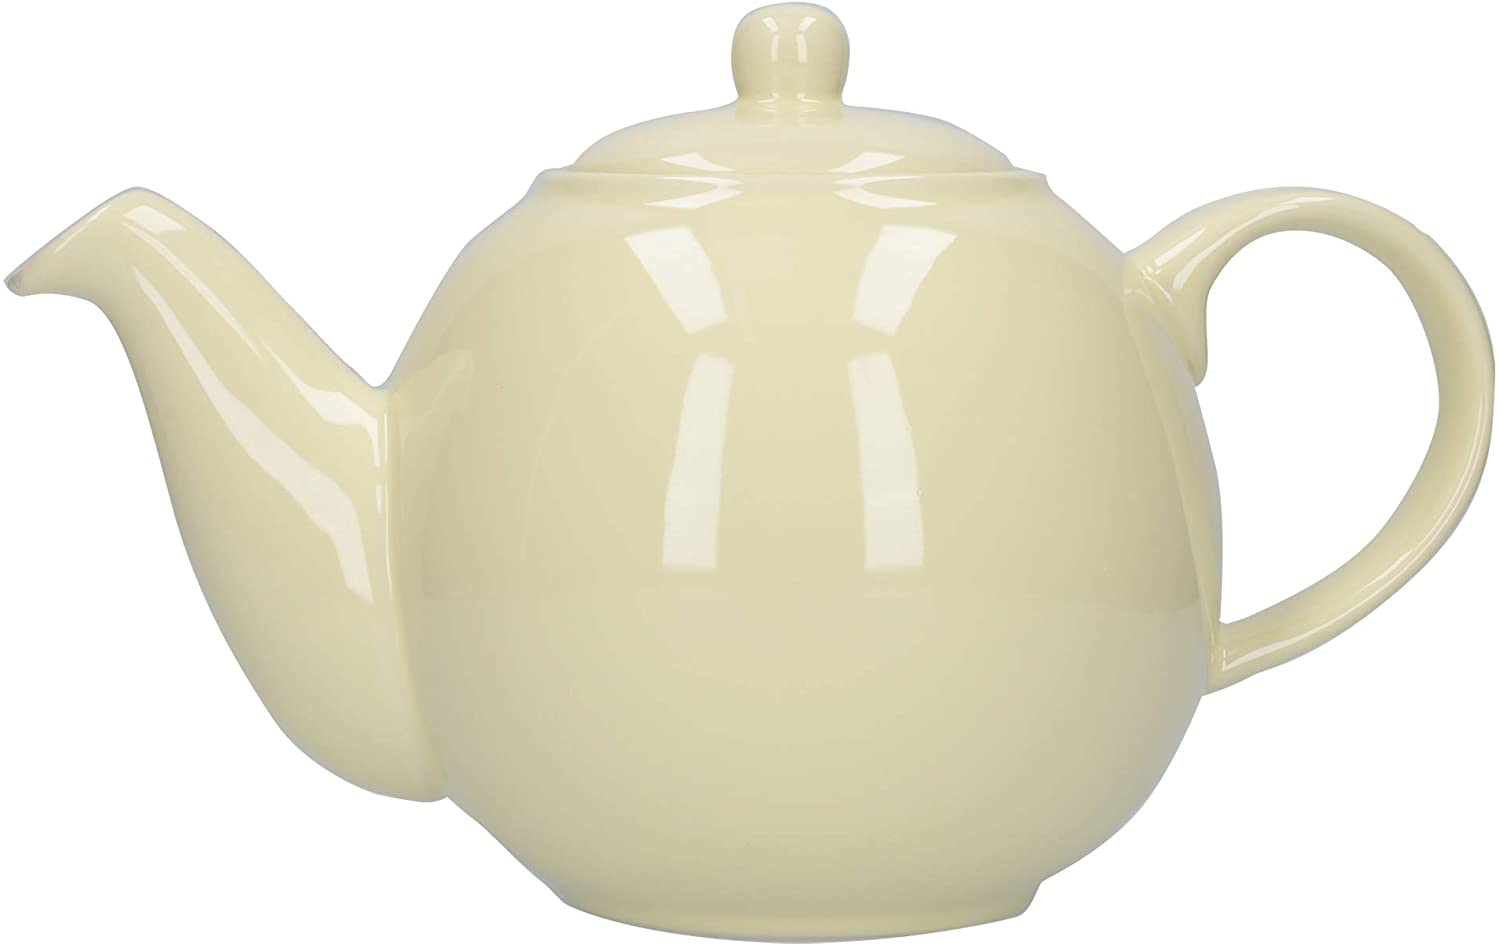 Dexam London Pottery 6 Cup Globe Teapot Ivory